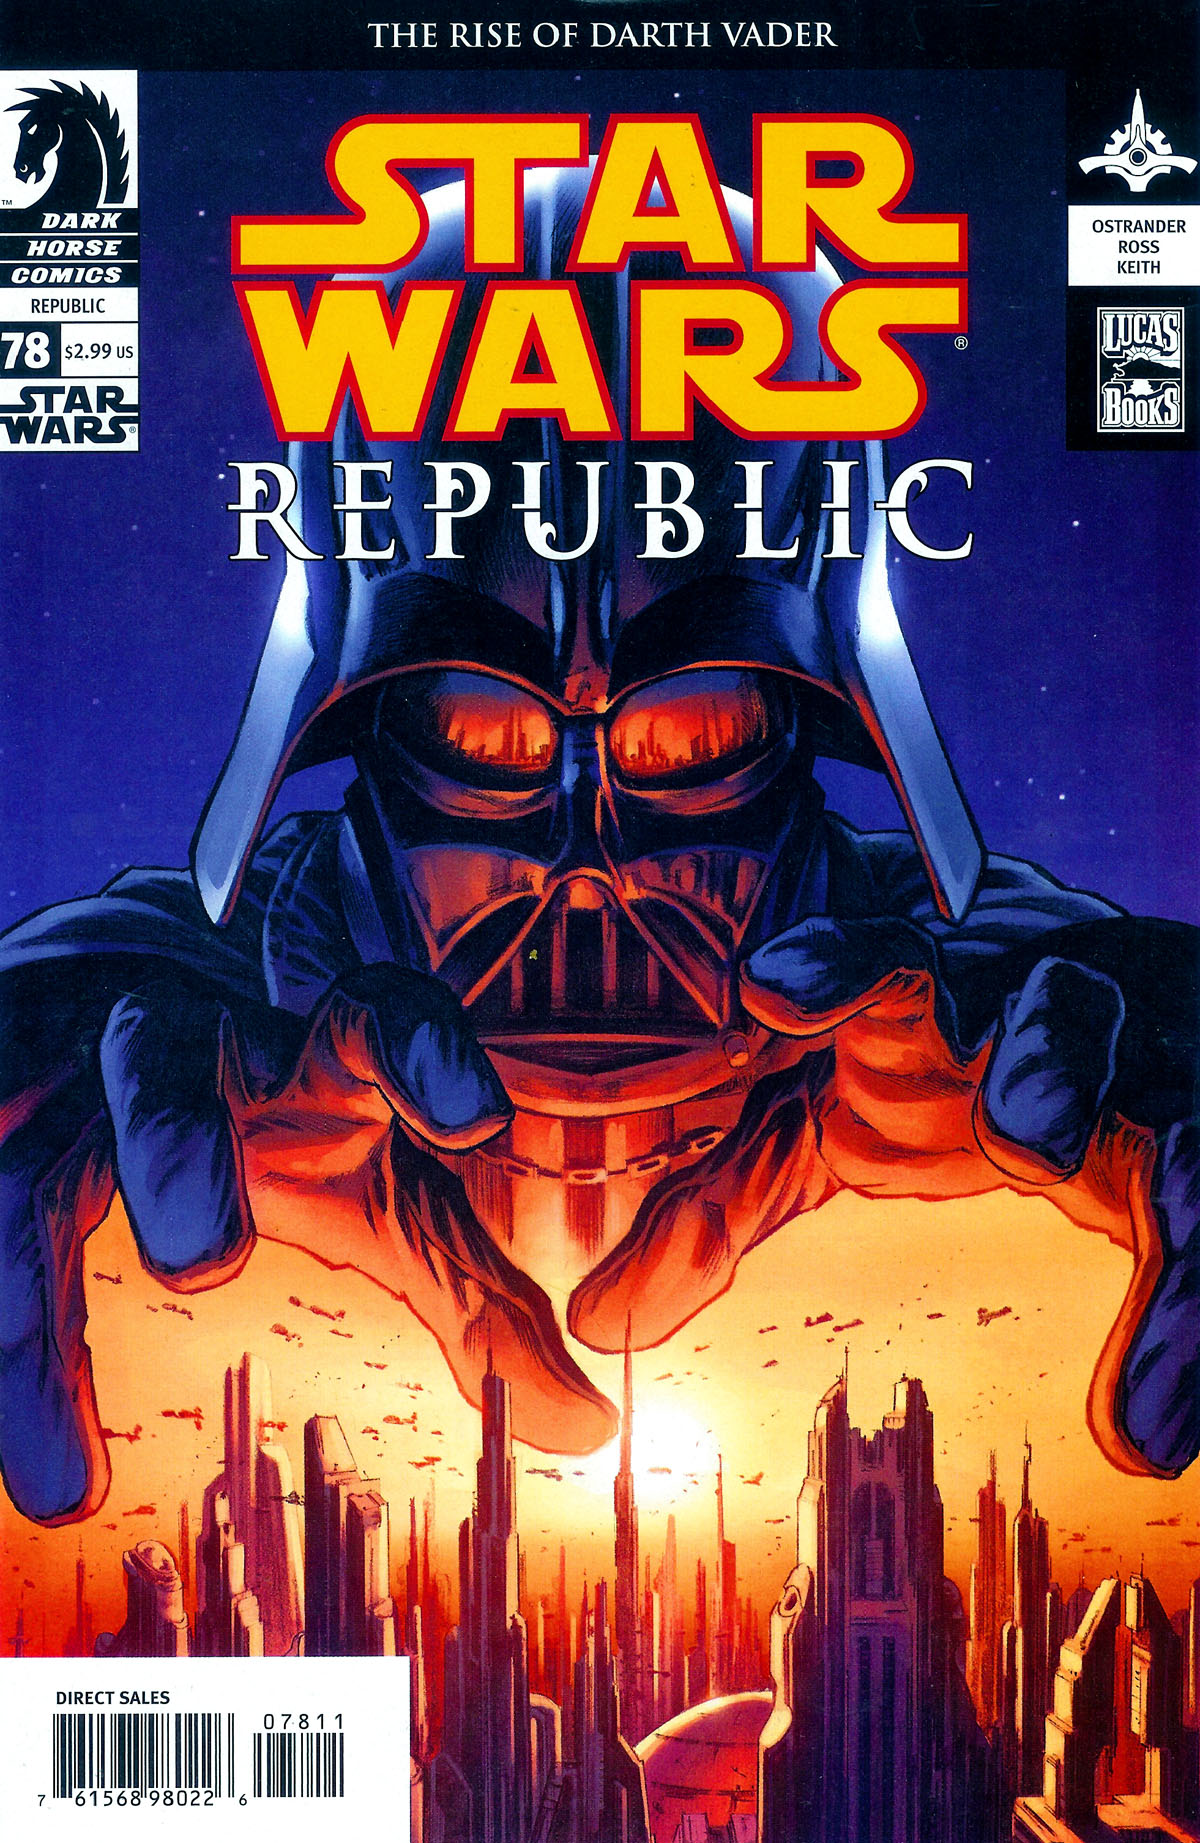 star wars the high republic book 1